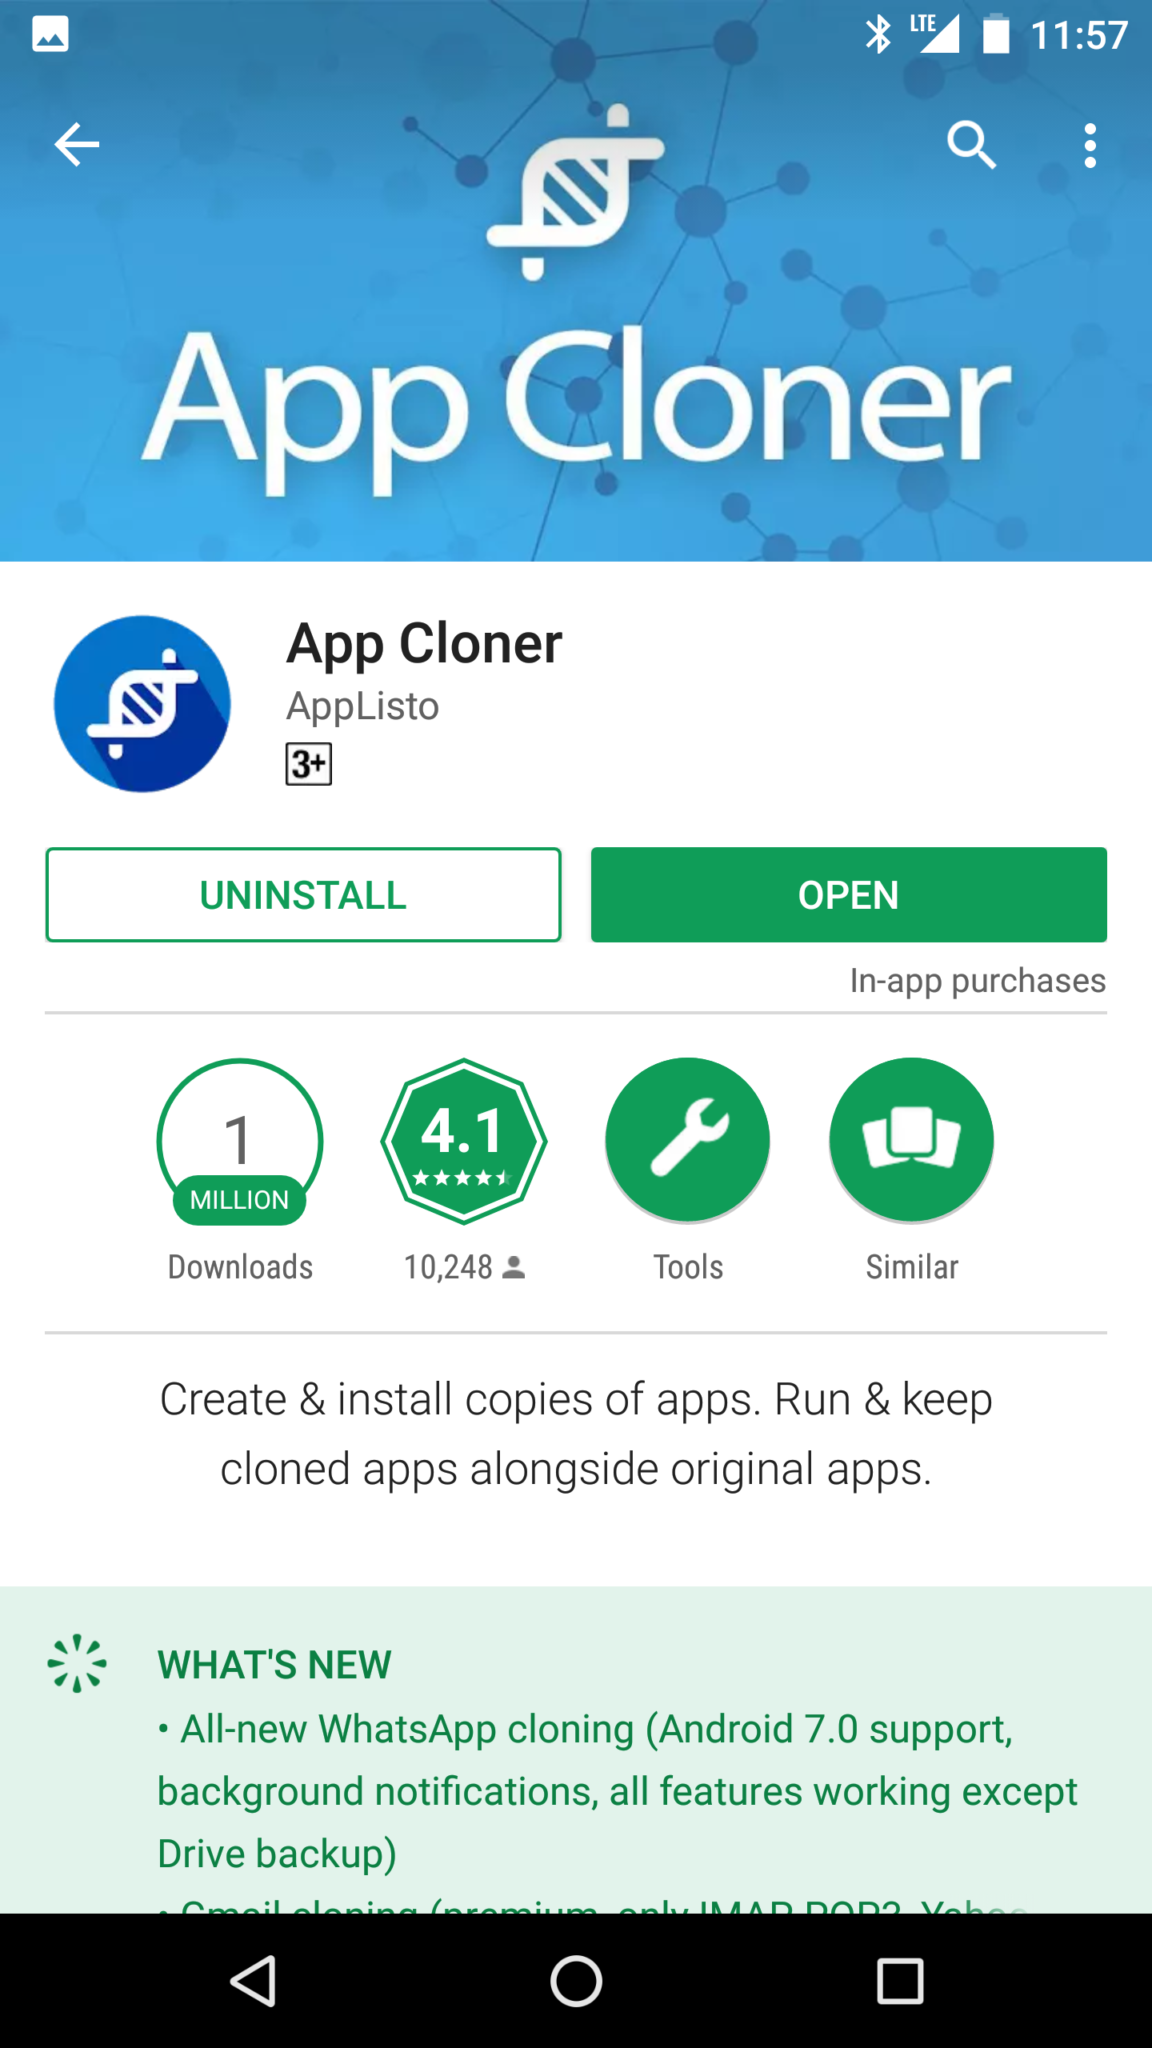 App cloner